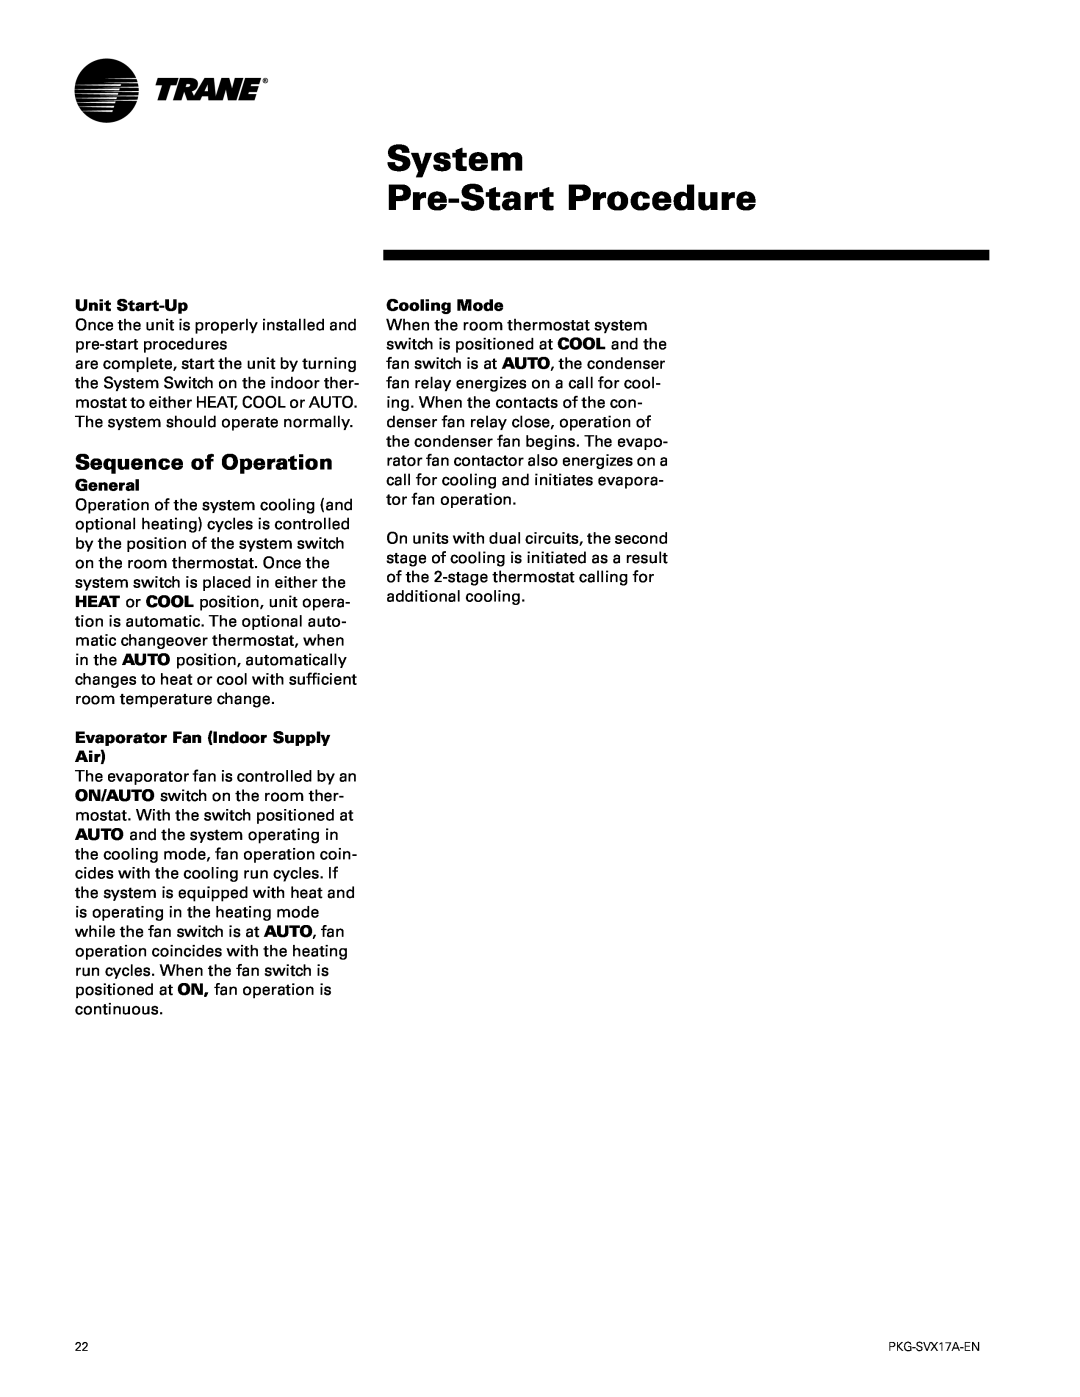 Trane PKG-SVX17A-EN manual Sequence of Operation, System Pre-StartProcedure, Unit Start-Up, General, Cooling Mode 